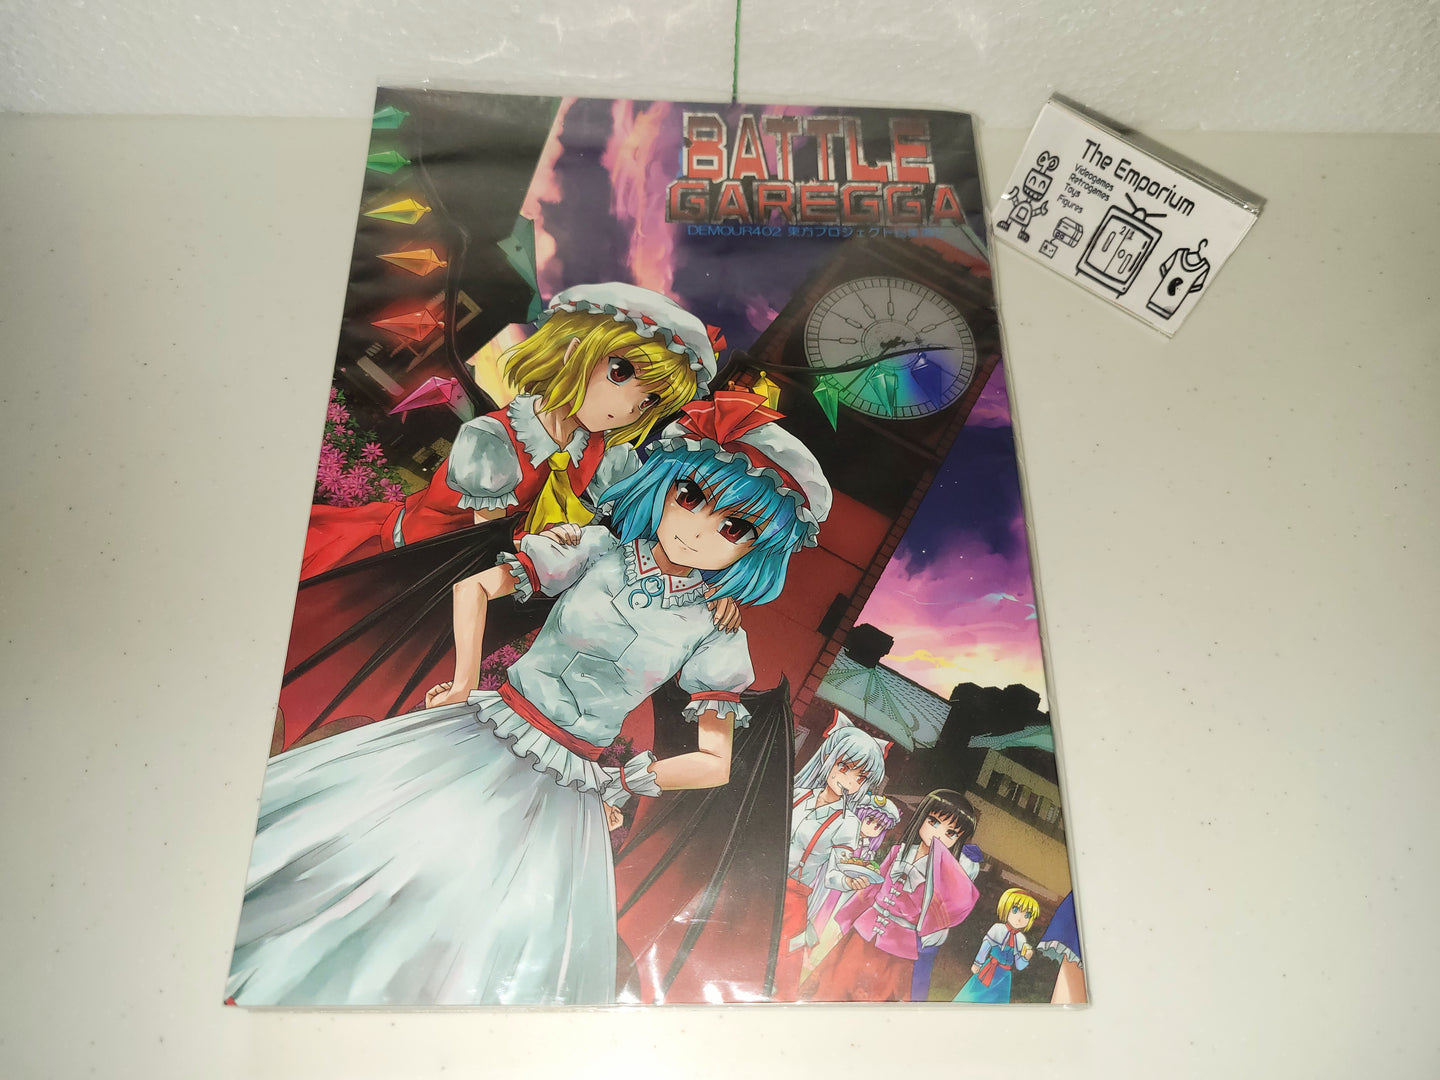 BATTLE GAREGGA / DEMOUR402 manga  - book